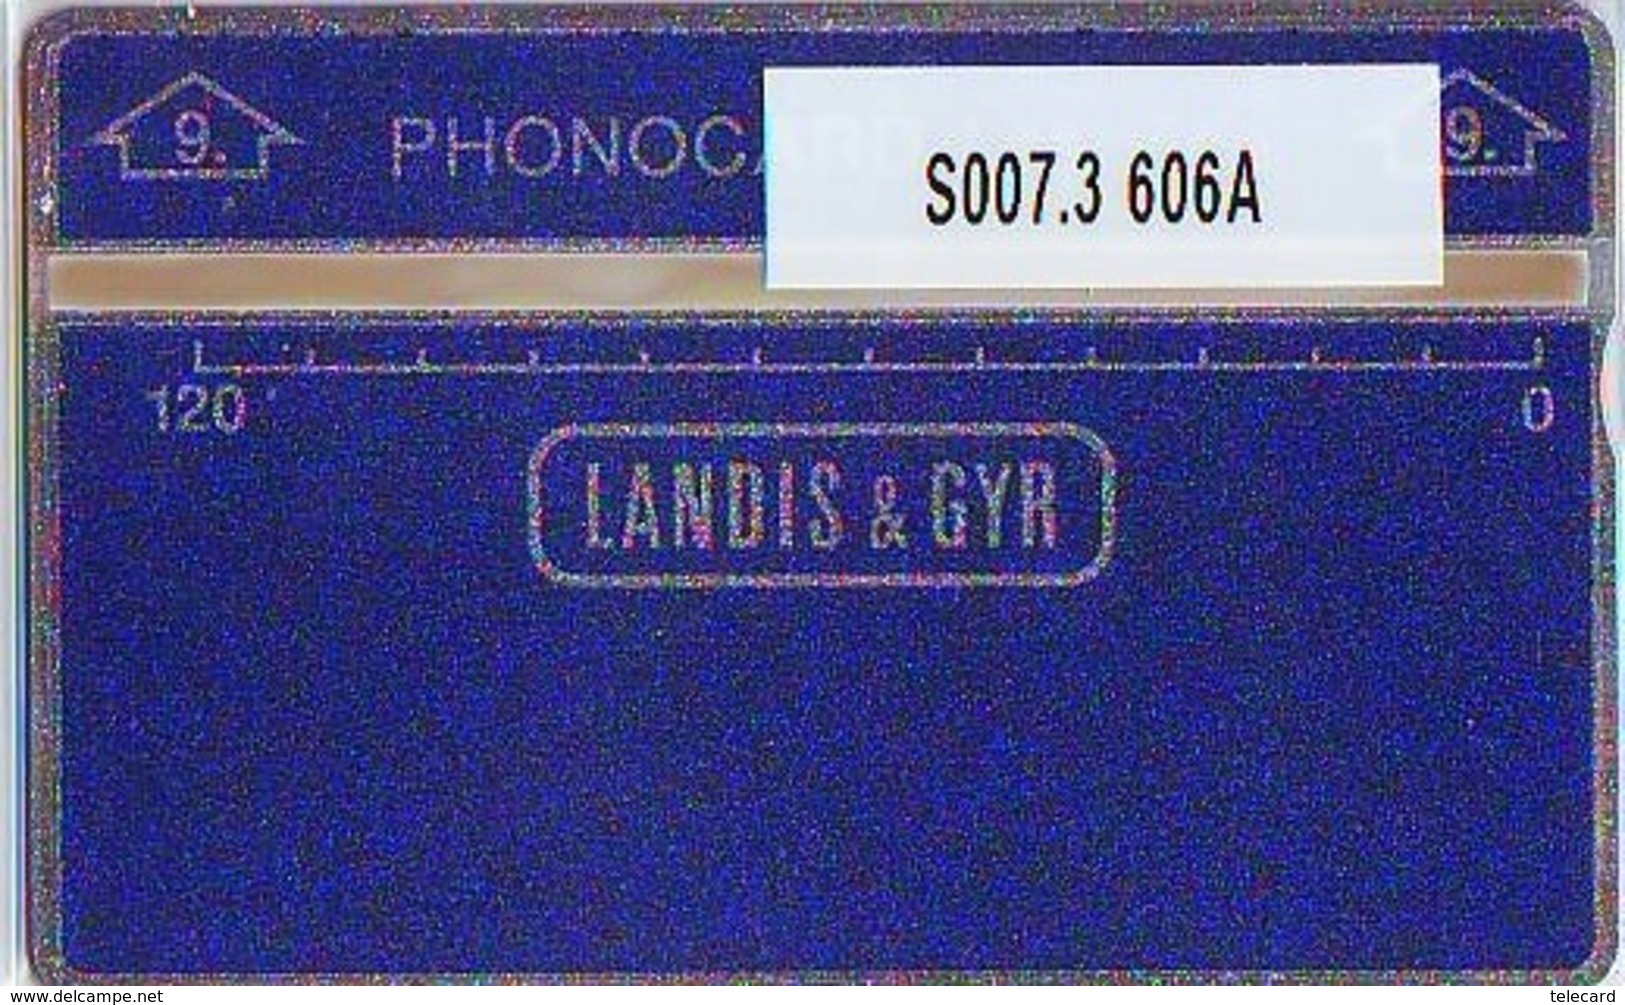 NEDERLAND LANDIS&GYR * SODECO * SERVICE CARD NR S007.3  606A  "9" ONGEBRUIKT *  MINT - [4] Test & Servicios